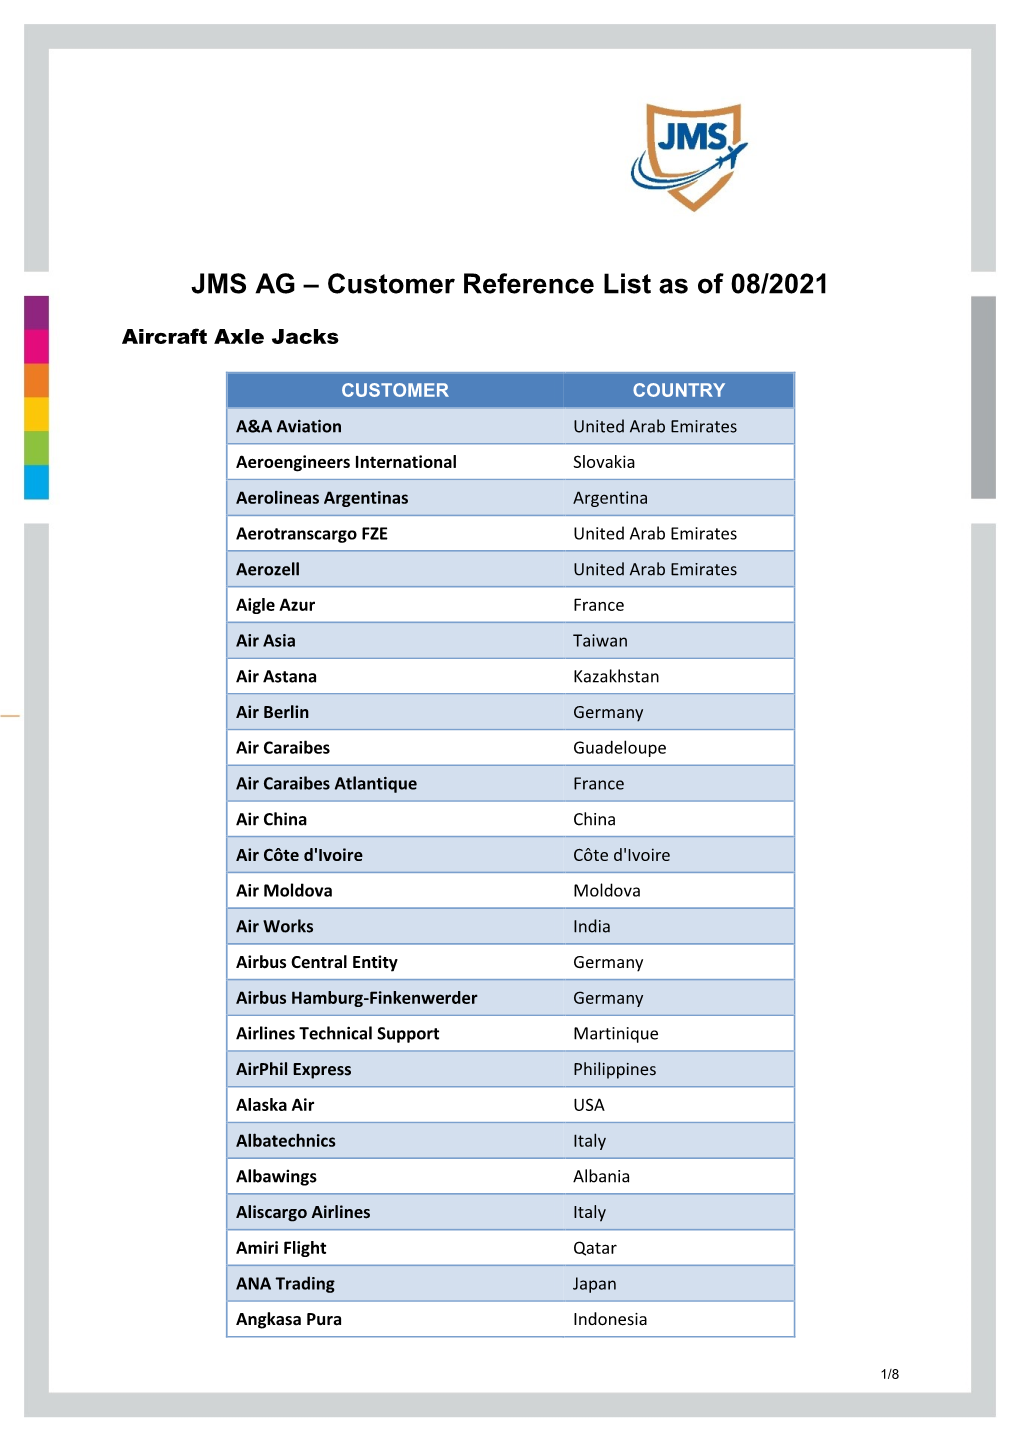 JMS AG – Customer Reference List As of 06/2021